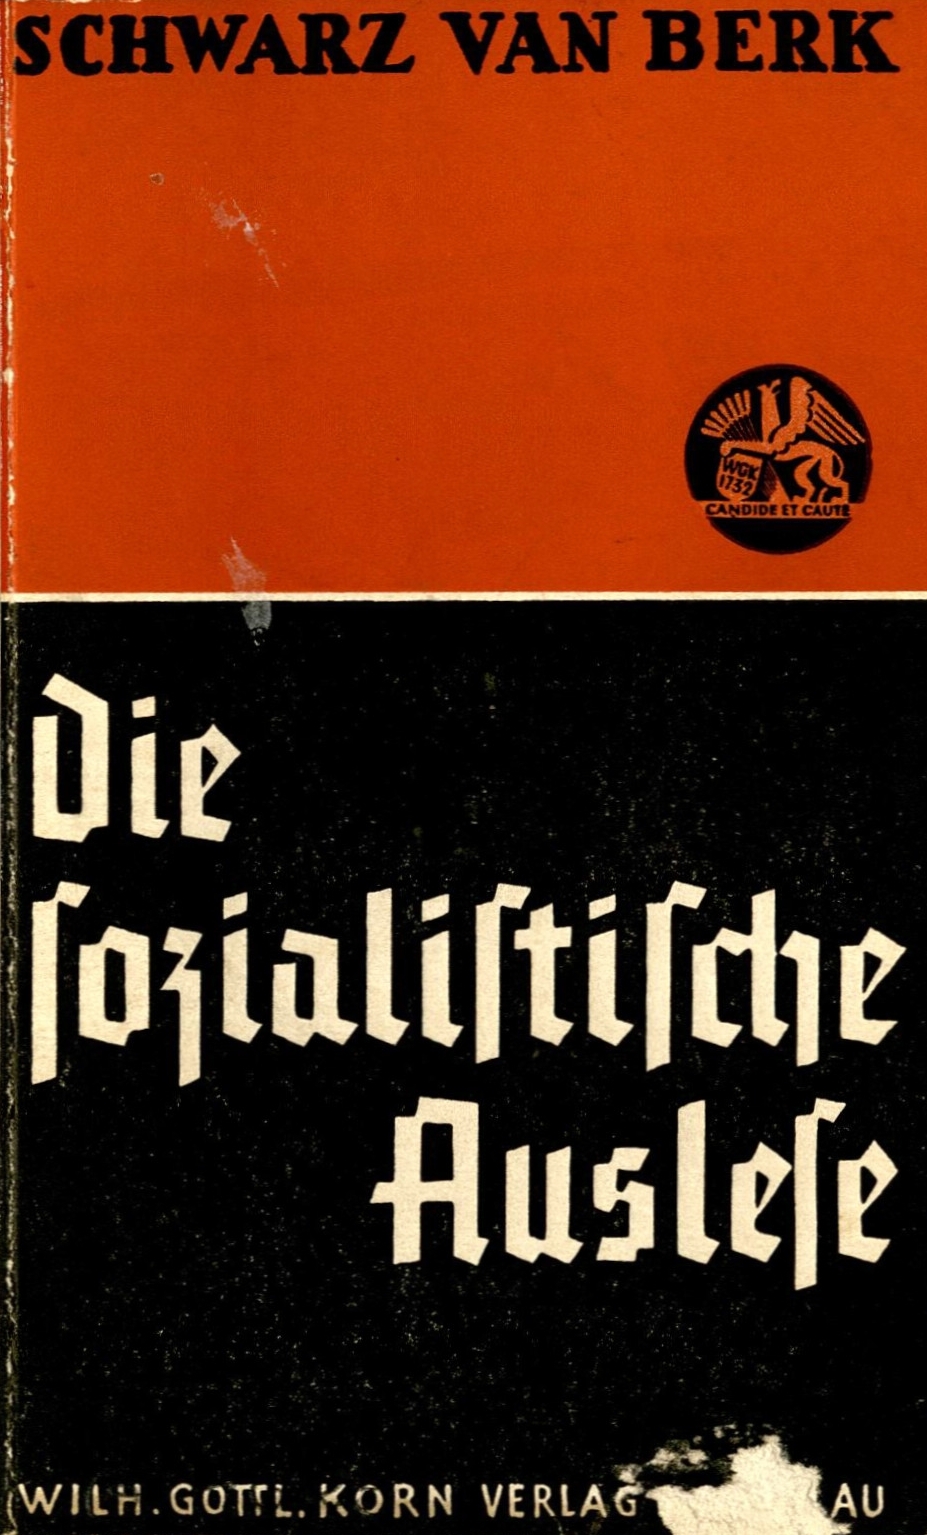 Buch Schwarz van Berk .jpg